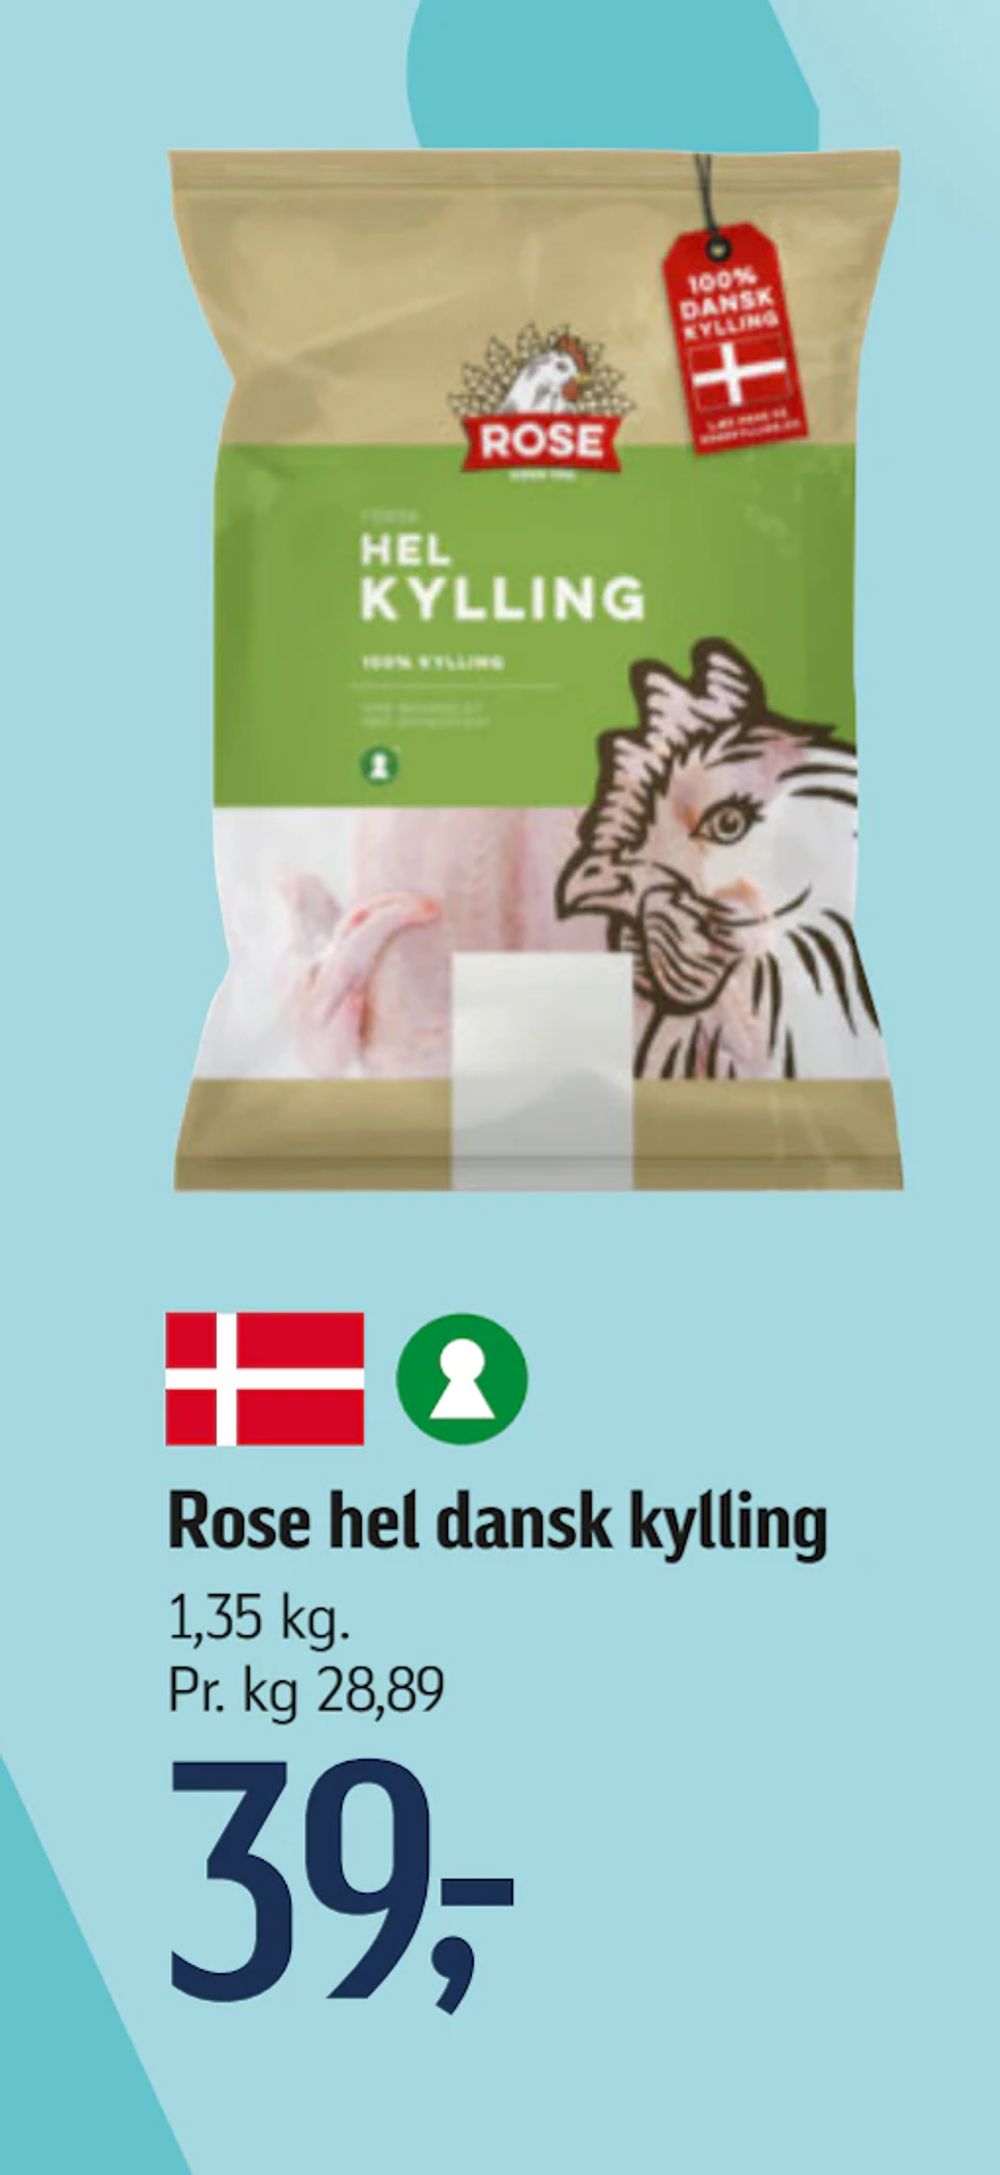 Tilbud på Rose hel dansk kylling fra føtex til 39 kr.